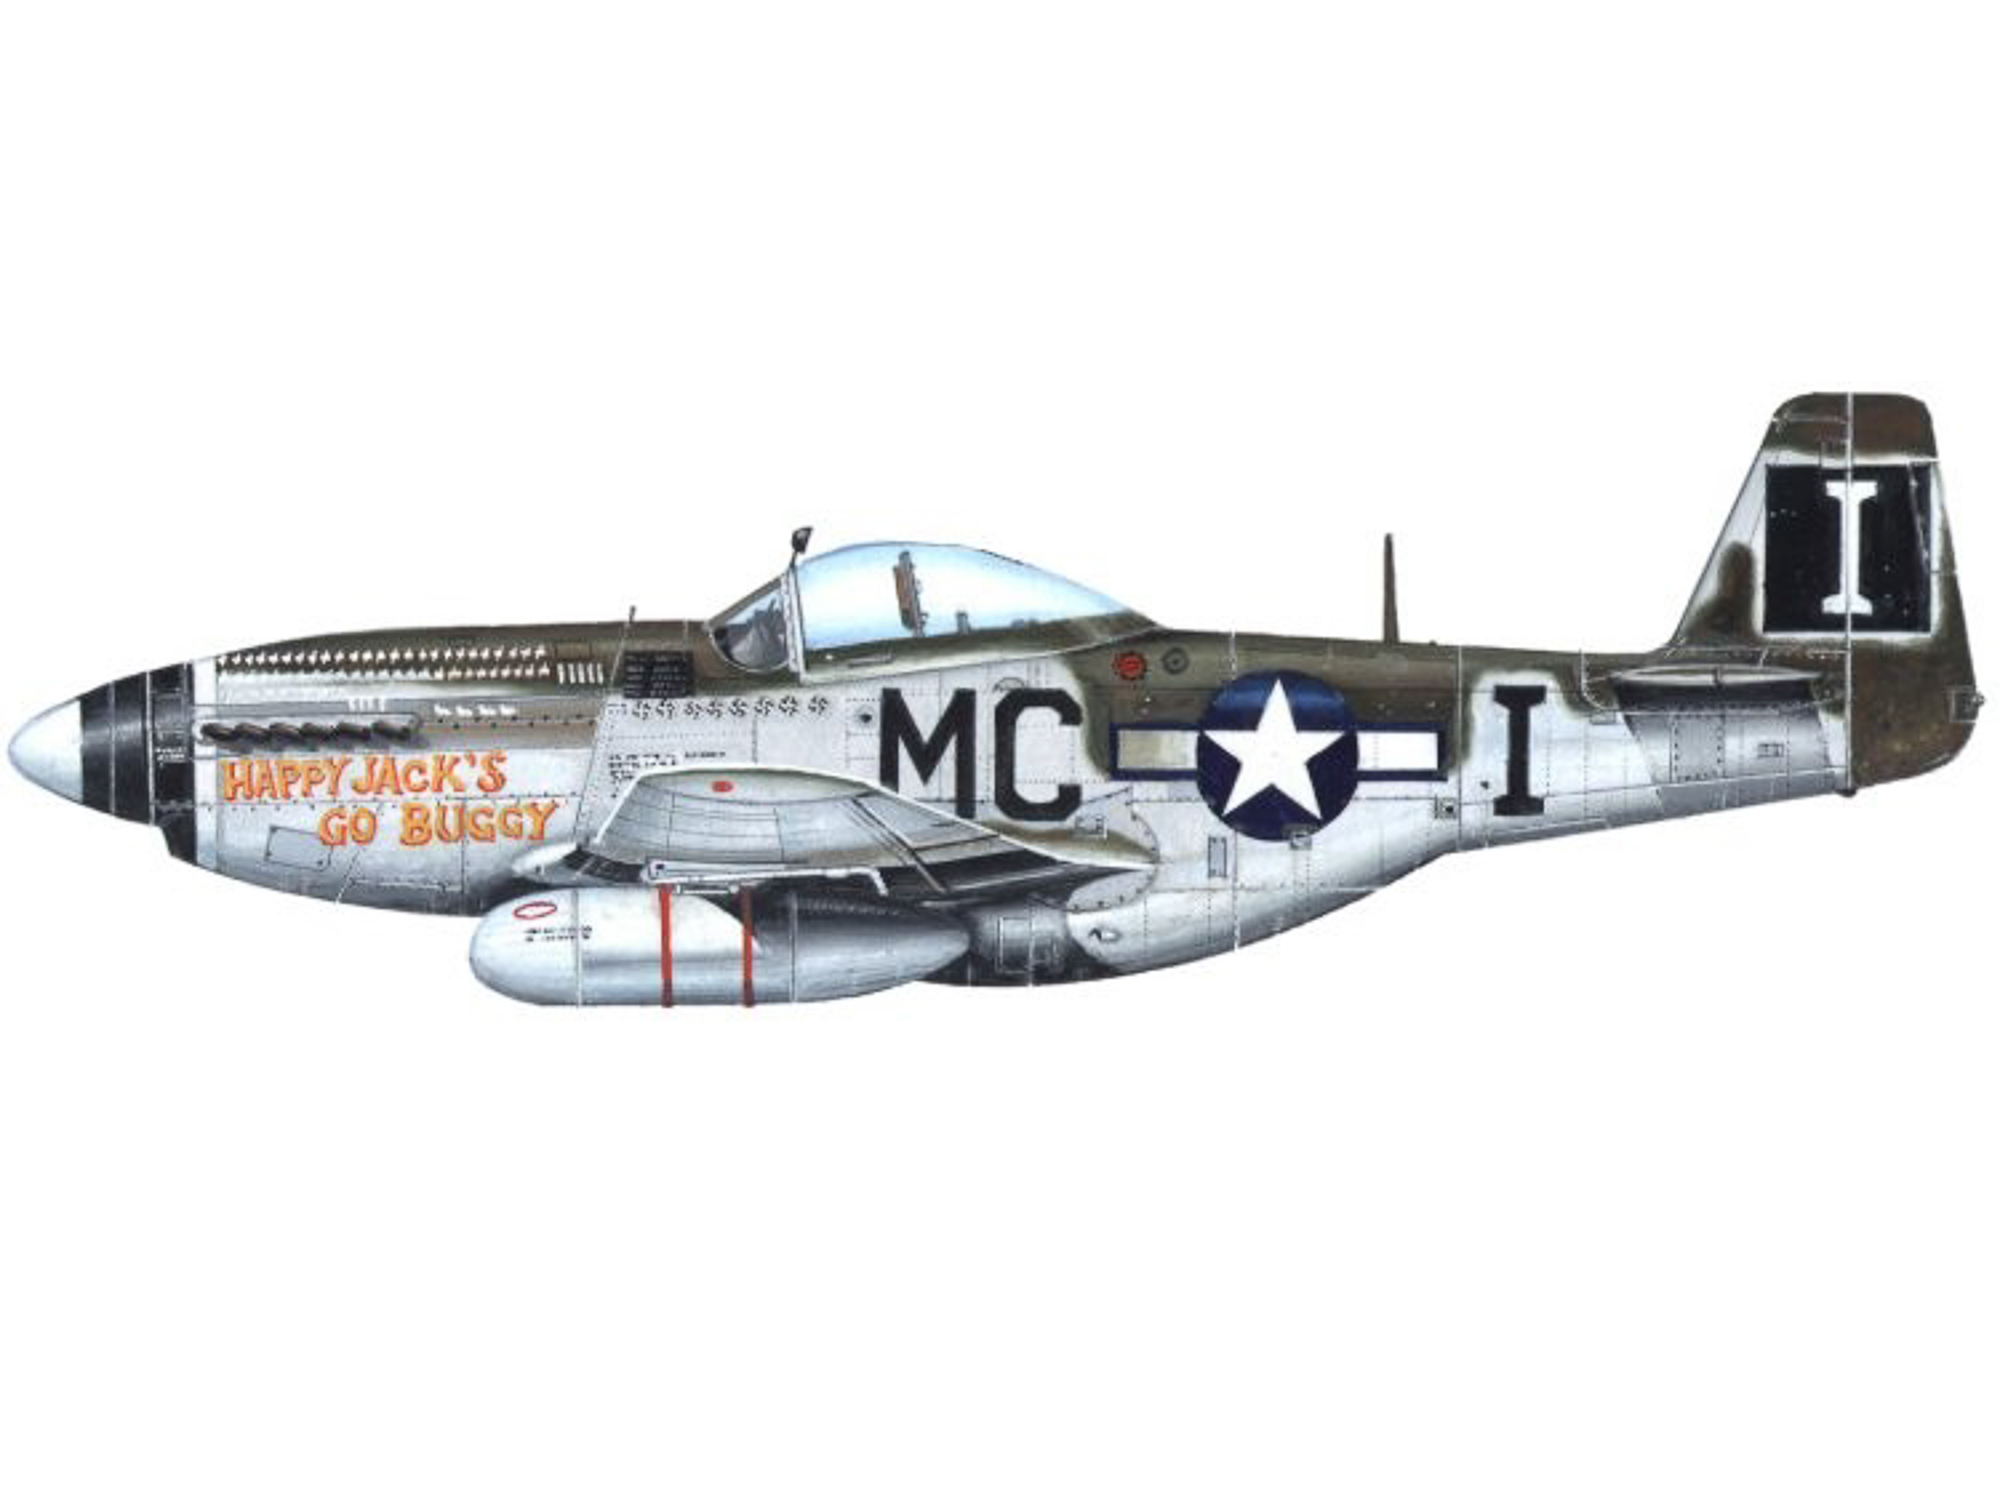 P-51D – Happy Jack's Go Buggy – 44-13761